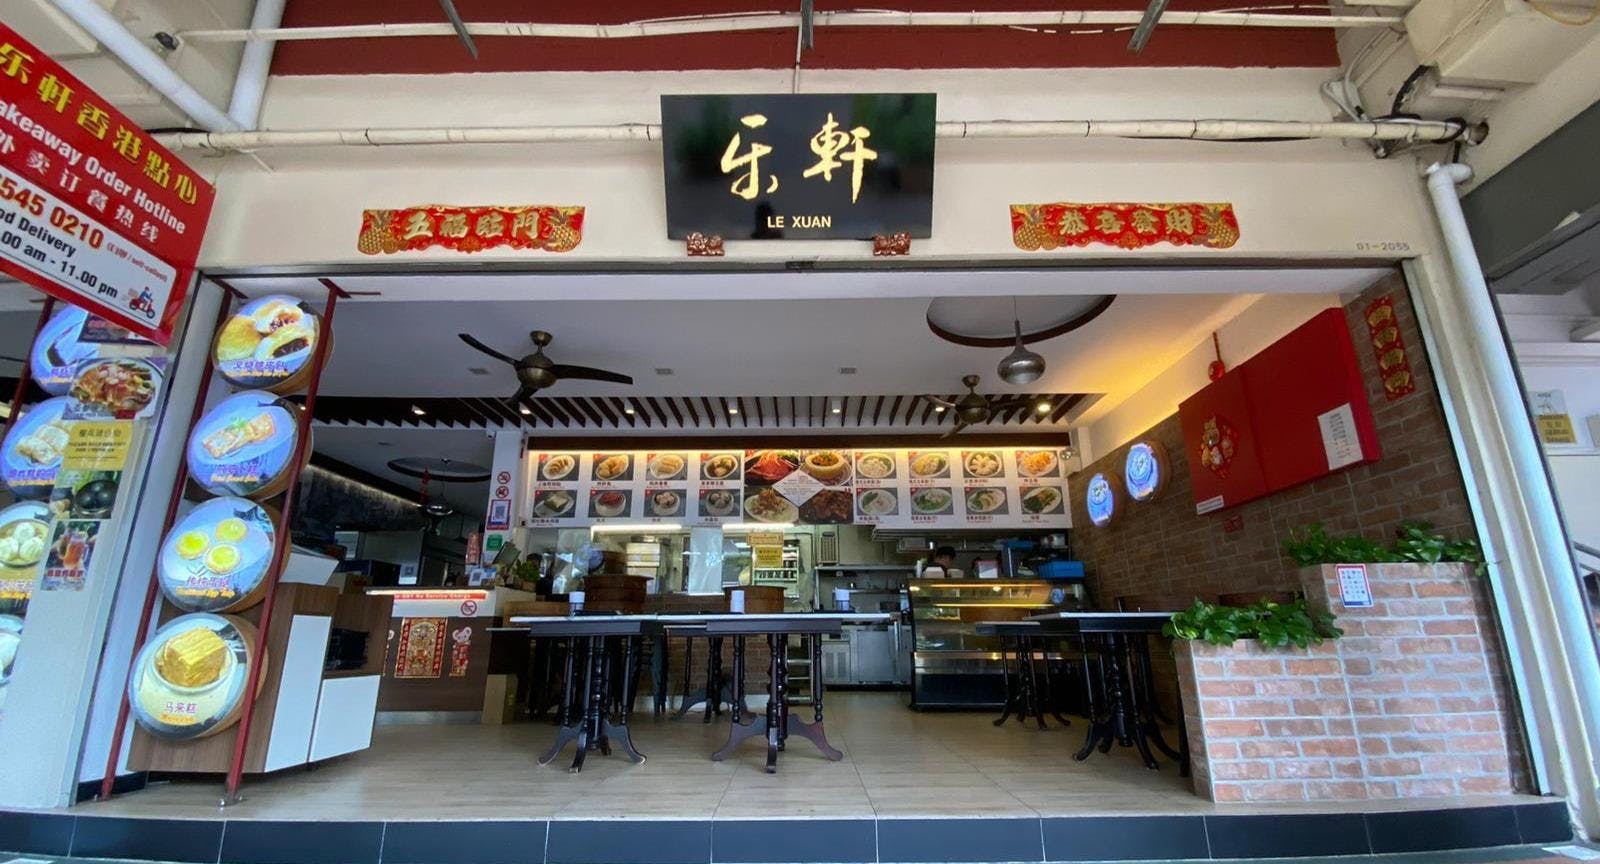 Photo of restaurant Le Xuan Hong Kong Dim Sum in Changi, Singapore